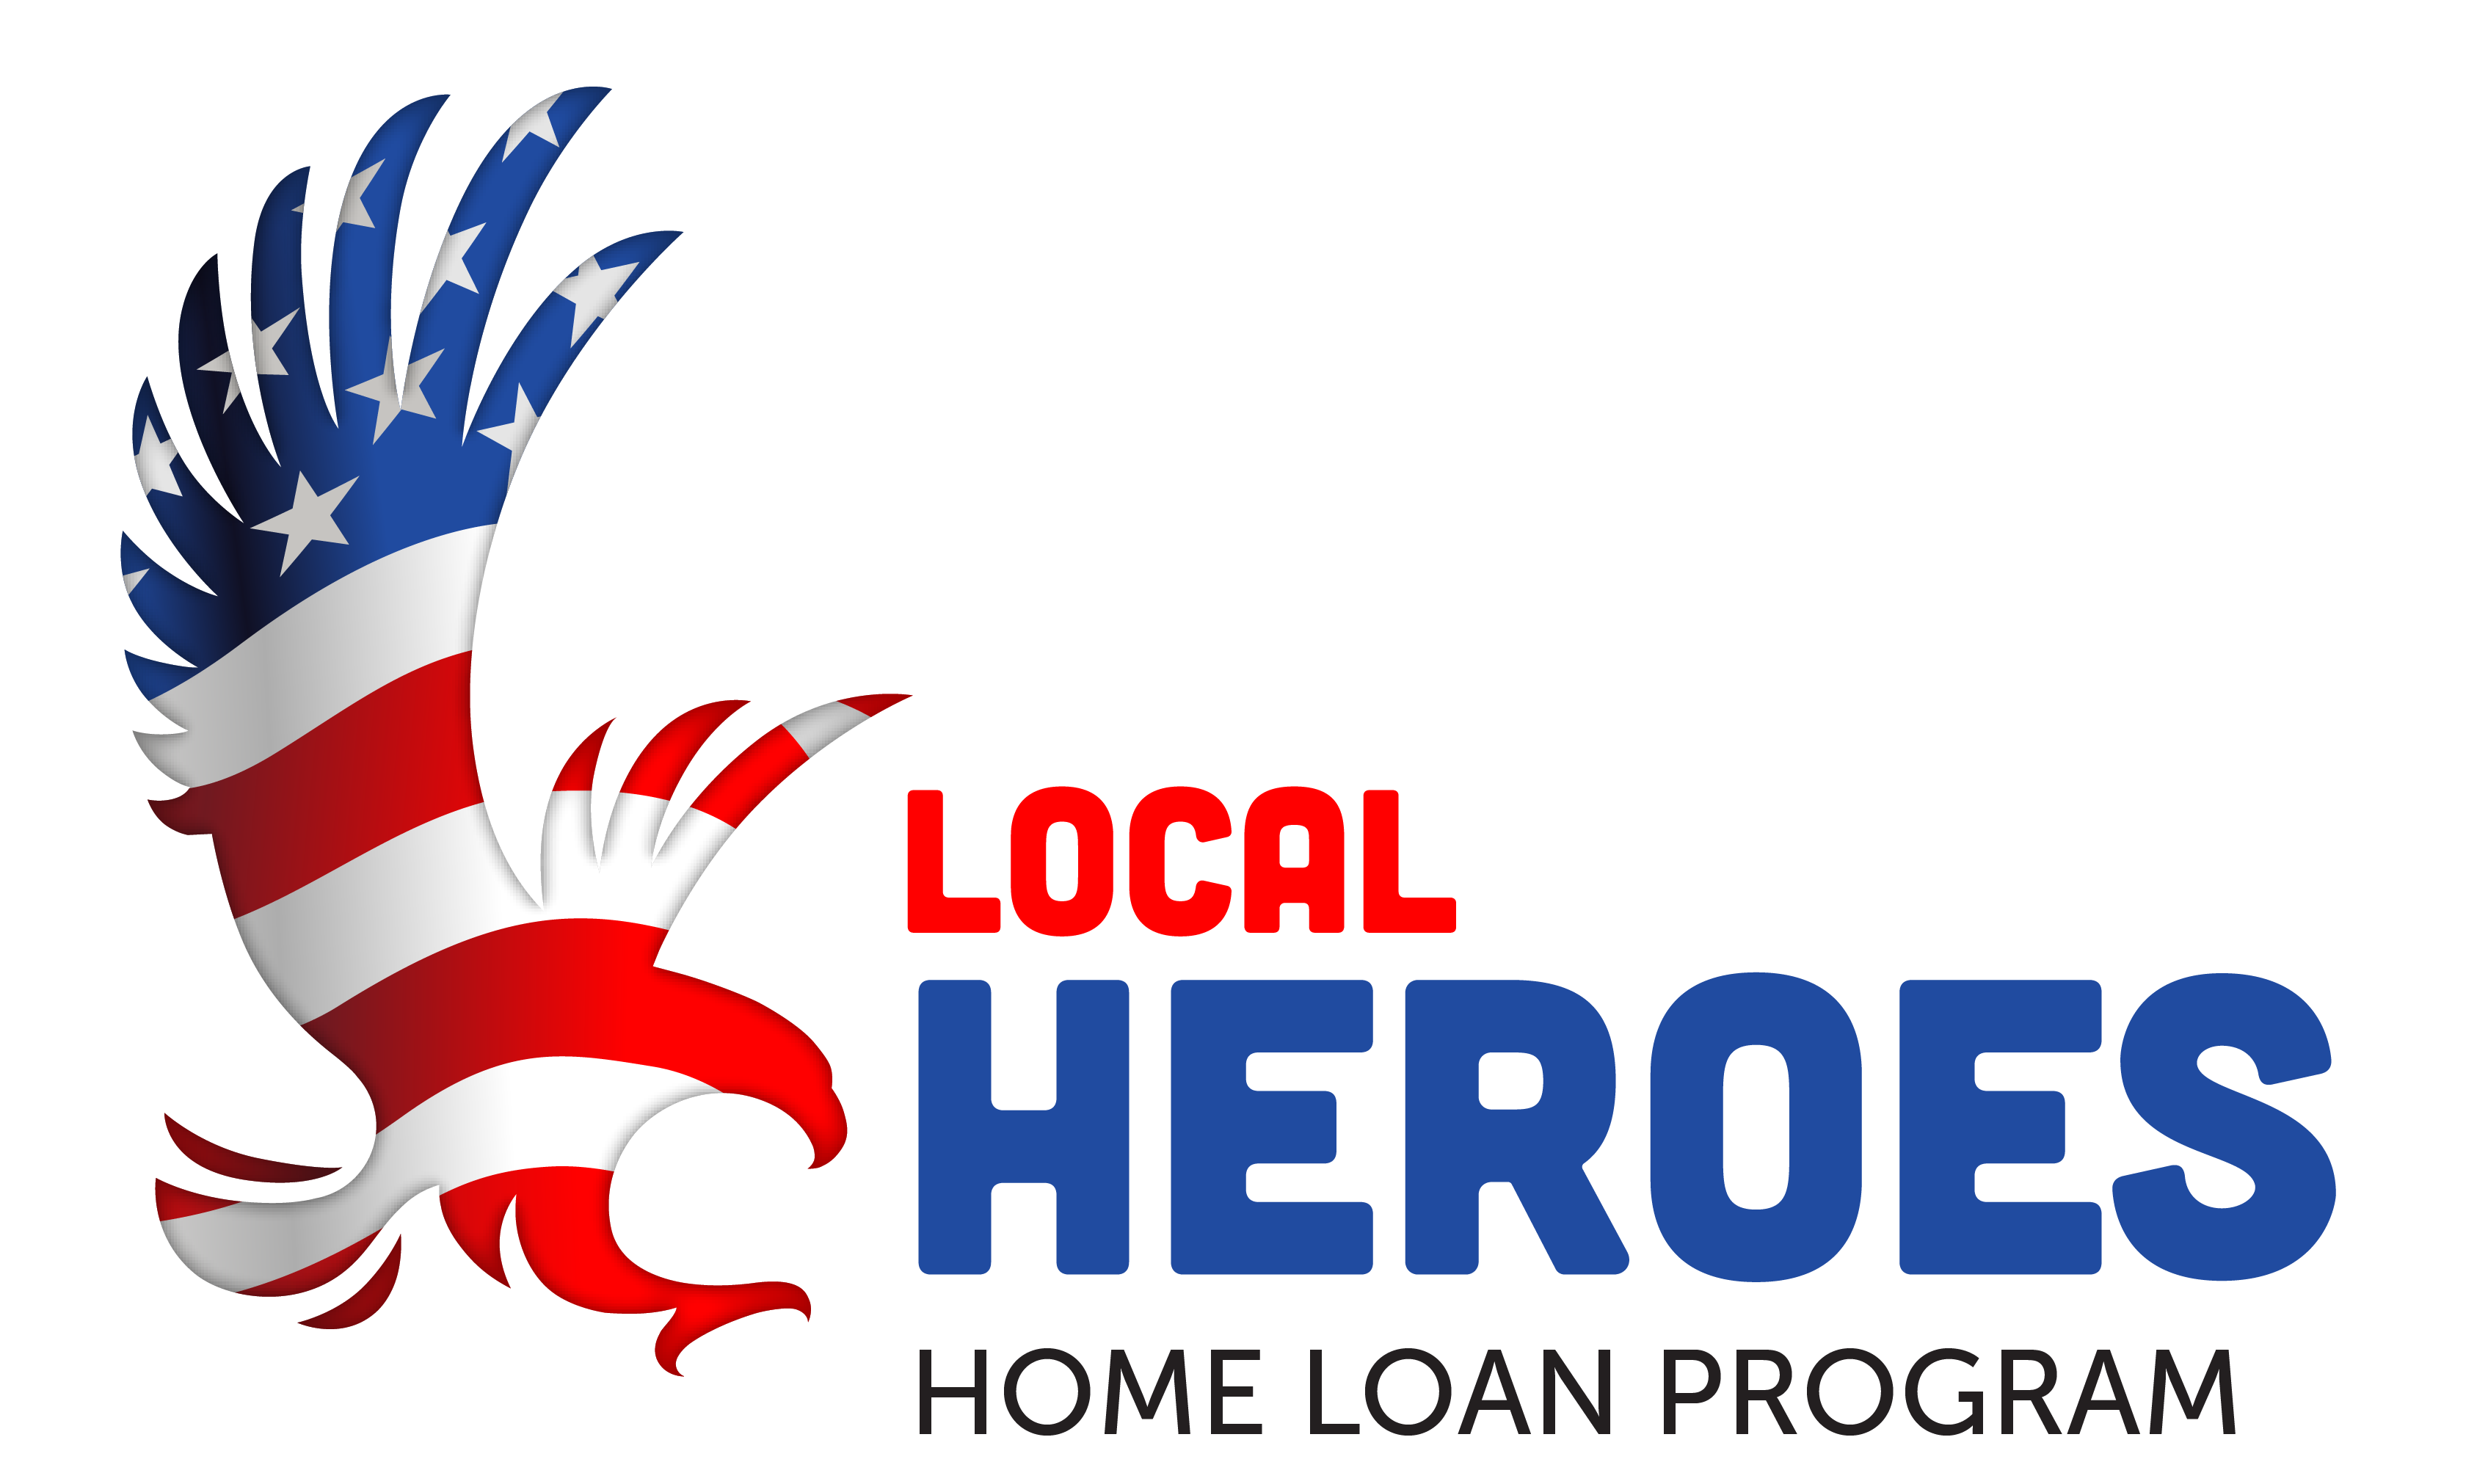 Local Heroes Home Loan Program featuring Americana Eagle Logo